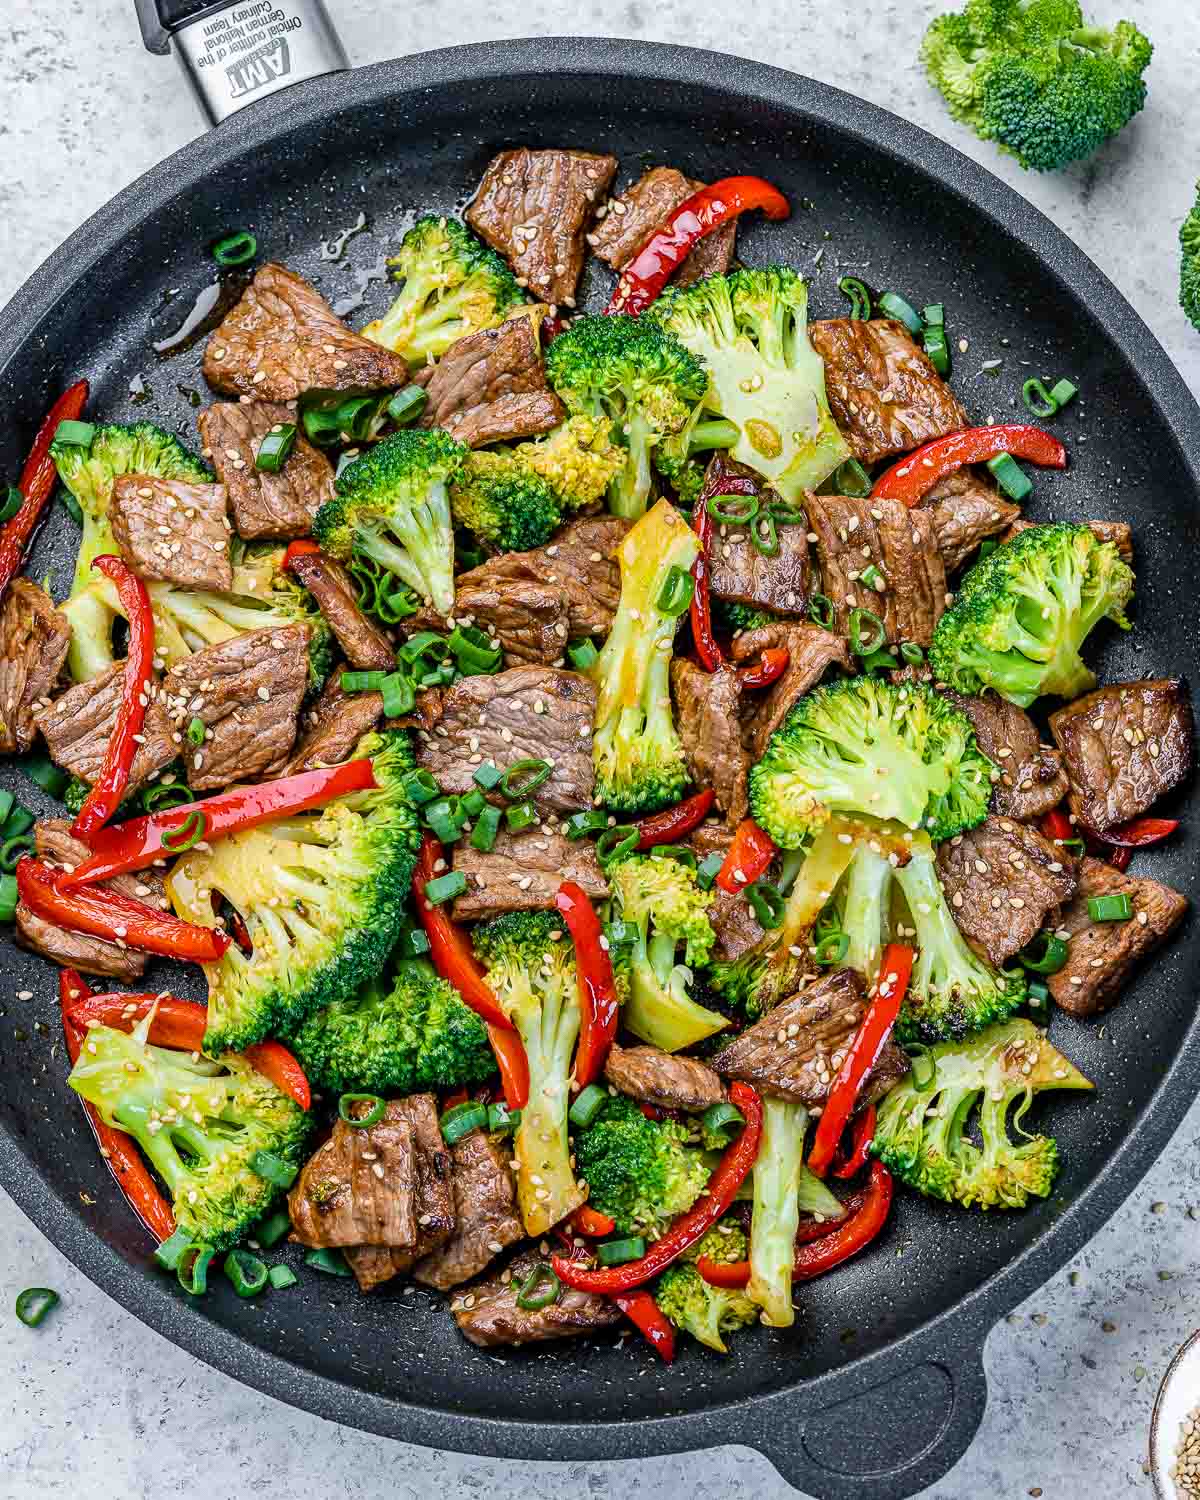 https://cleanfoodcrush.com/wp-content/uploads/2022/05/Beef-and-broccoli-stir-fry-5.jpg